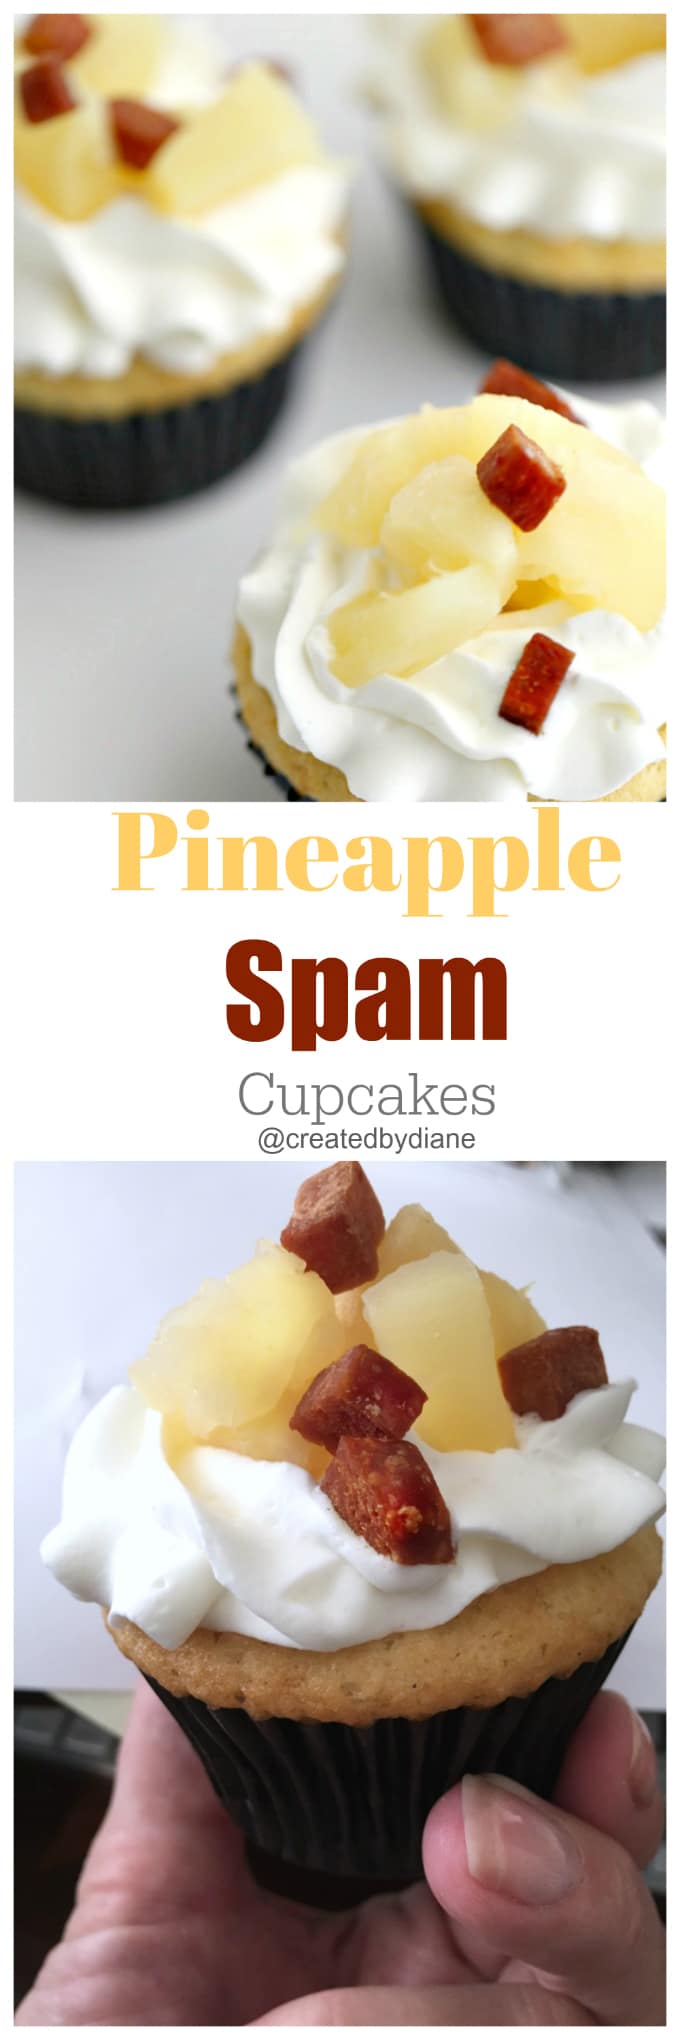 pineapple spam cupcakes @createdbydiane